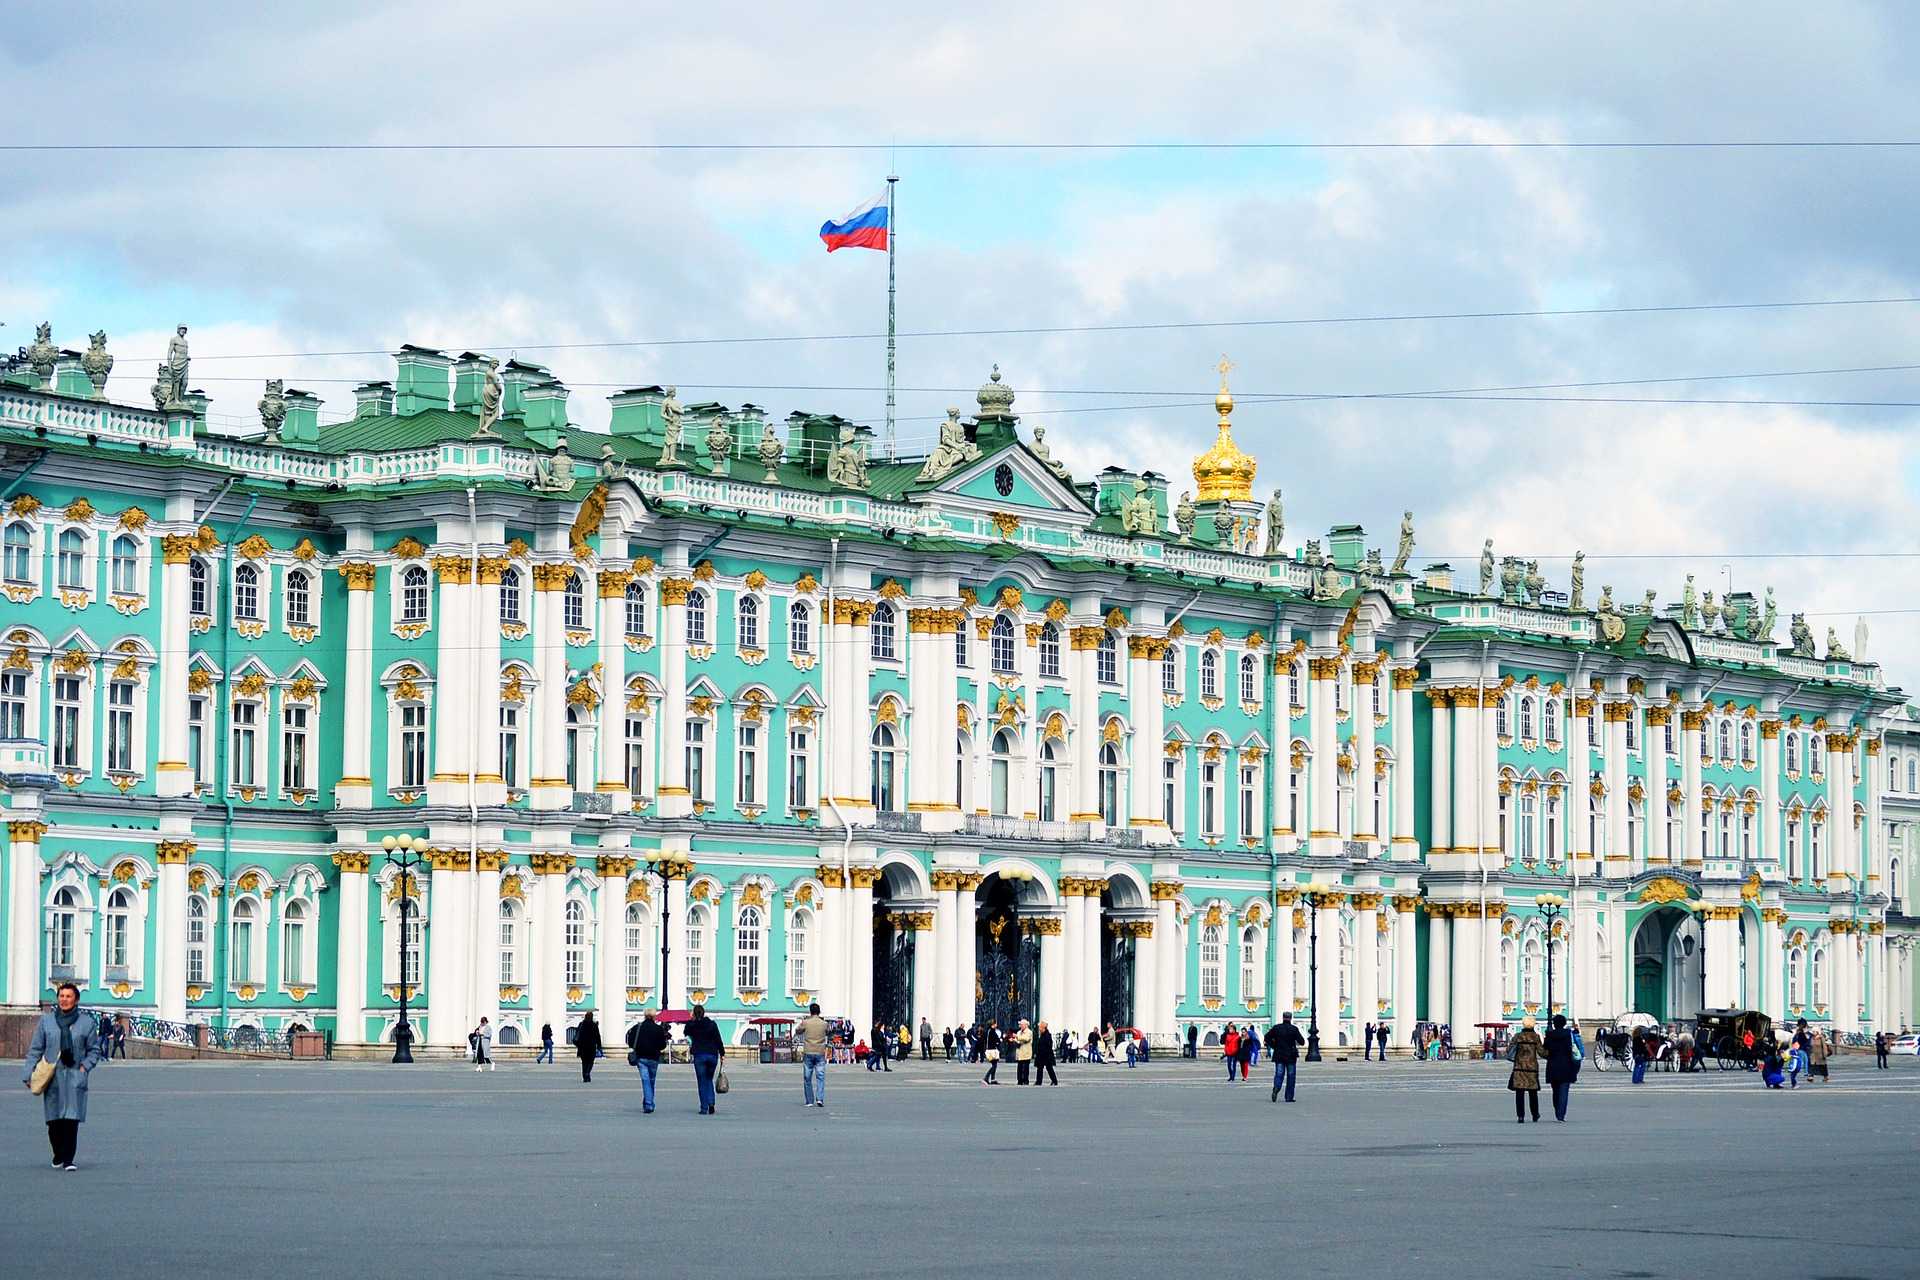 Зимний дворец санкт-петербурга или императорский дворец россии